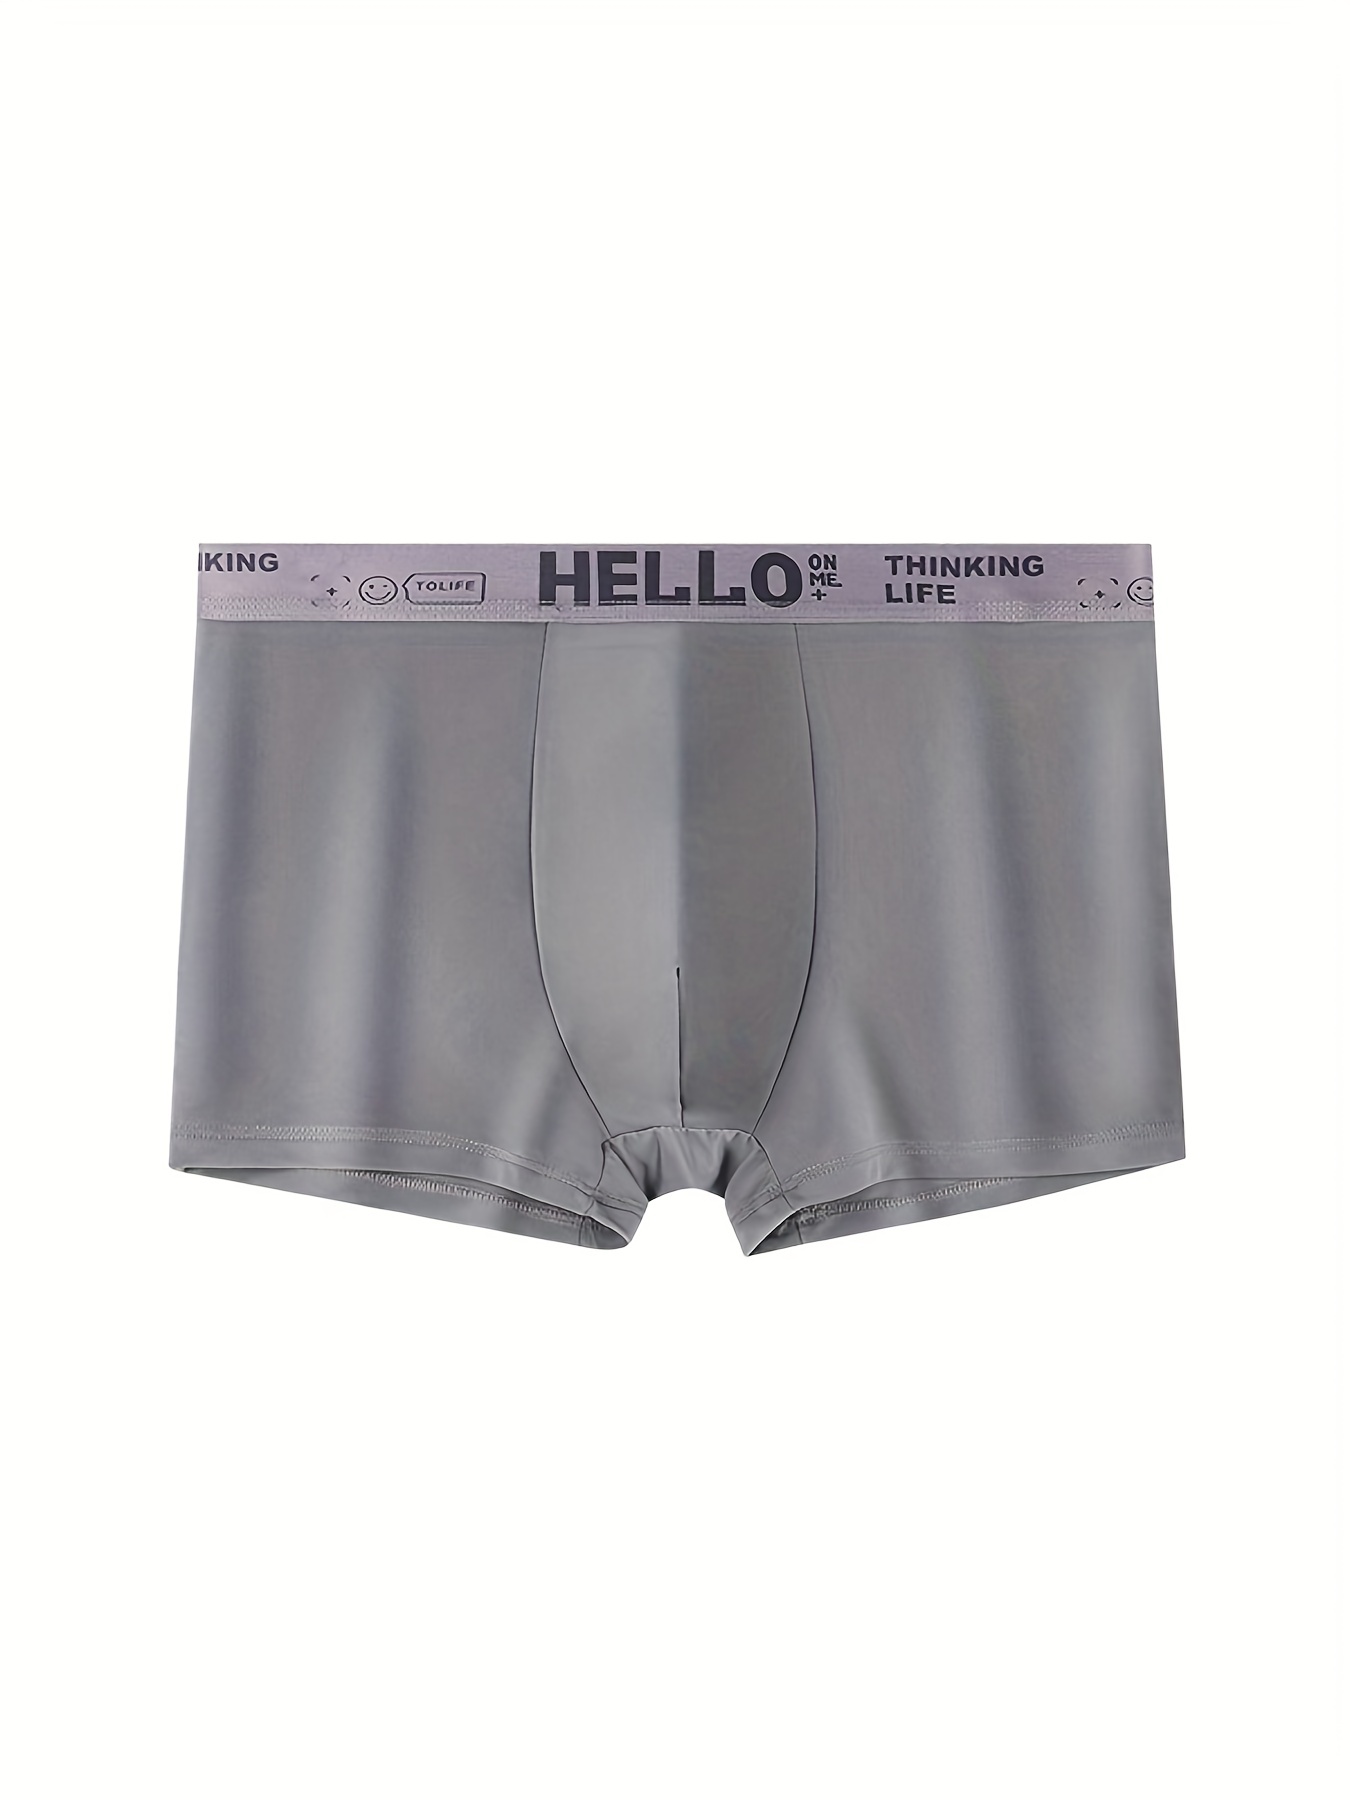 adviicd Mens Underwear Boxers Briefs For Men Men's Shorts Printed Underwear  Comfortable Breathable Home Stylish Men's Pants Men's underwear Sky Blue